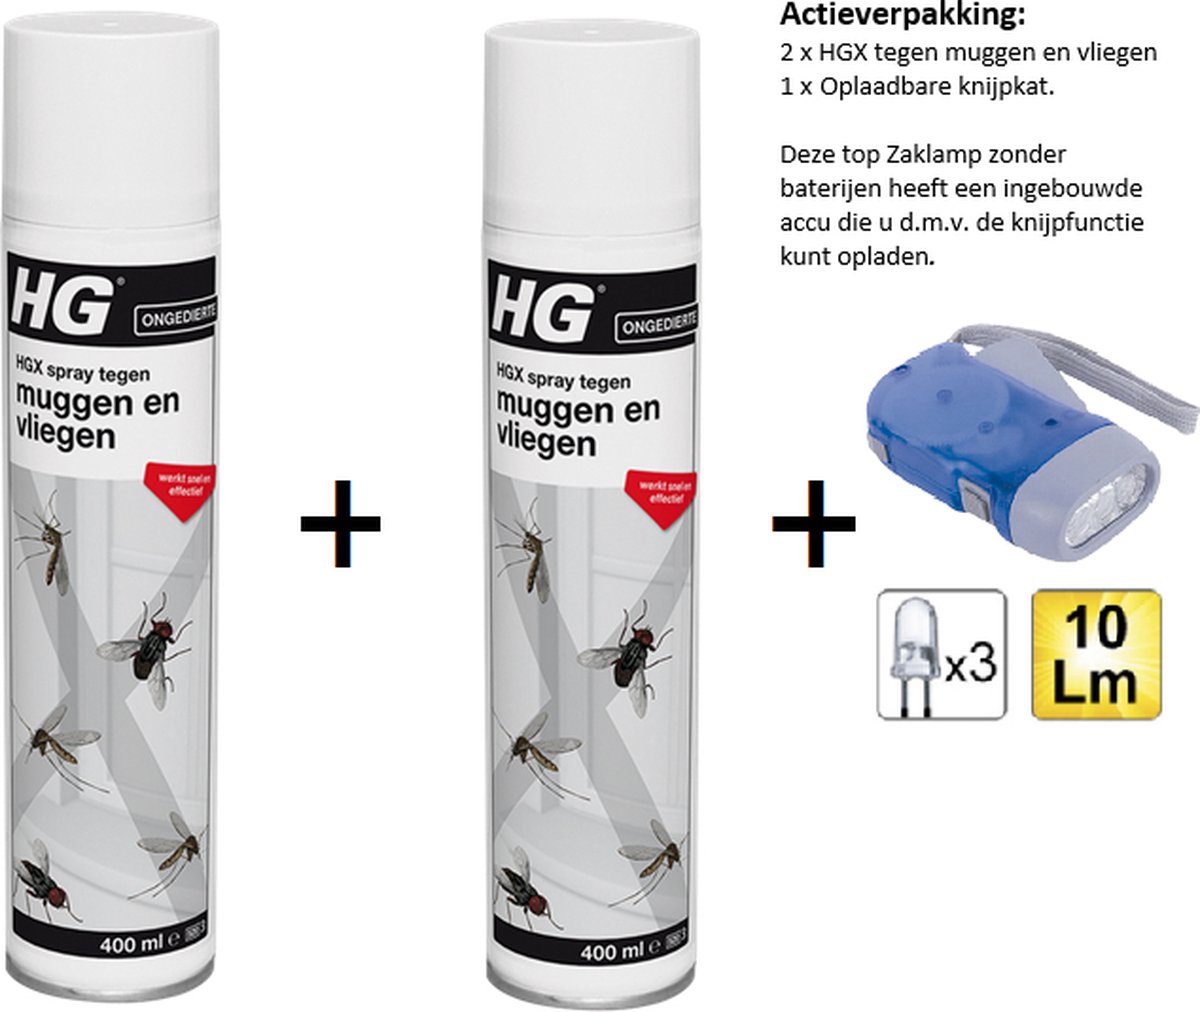 HGX spray tegen muggen en vliegen - 2 stuks + Zaklamp/Knijpkat